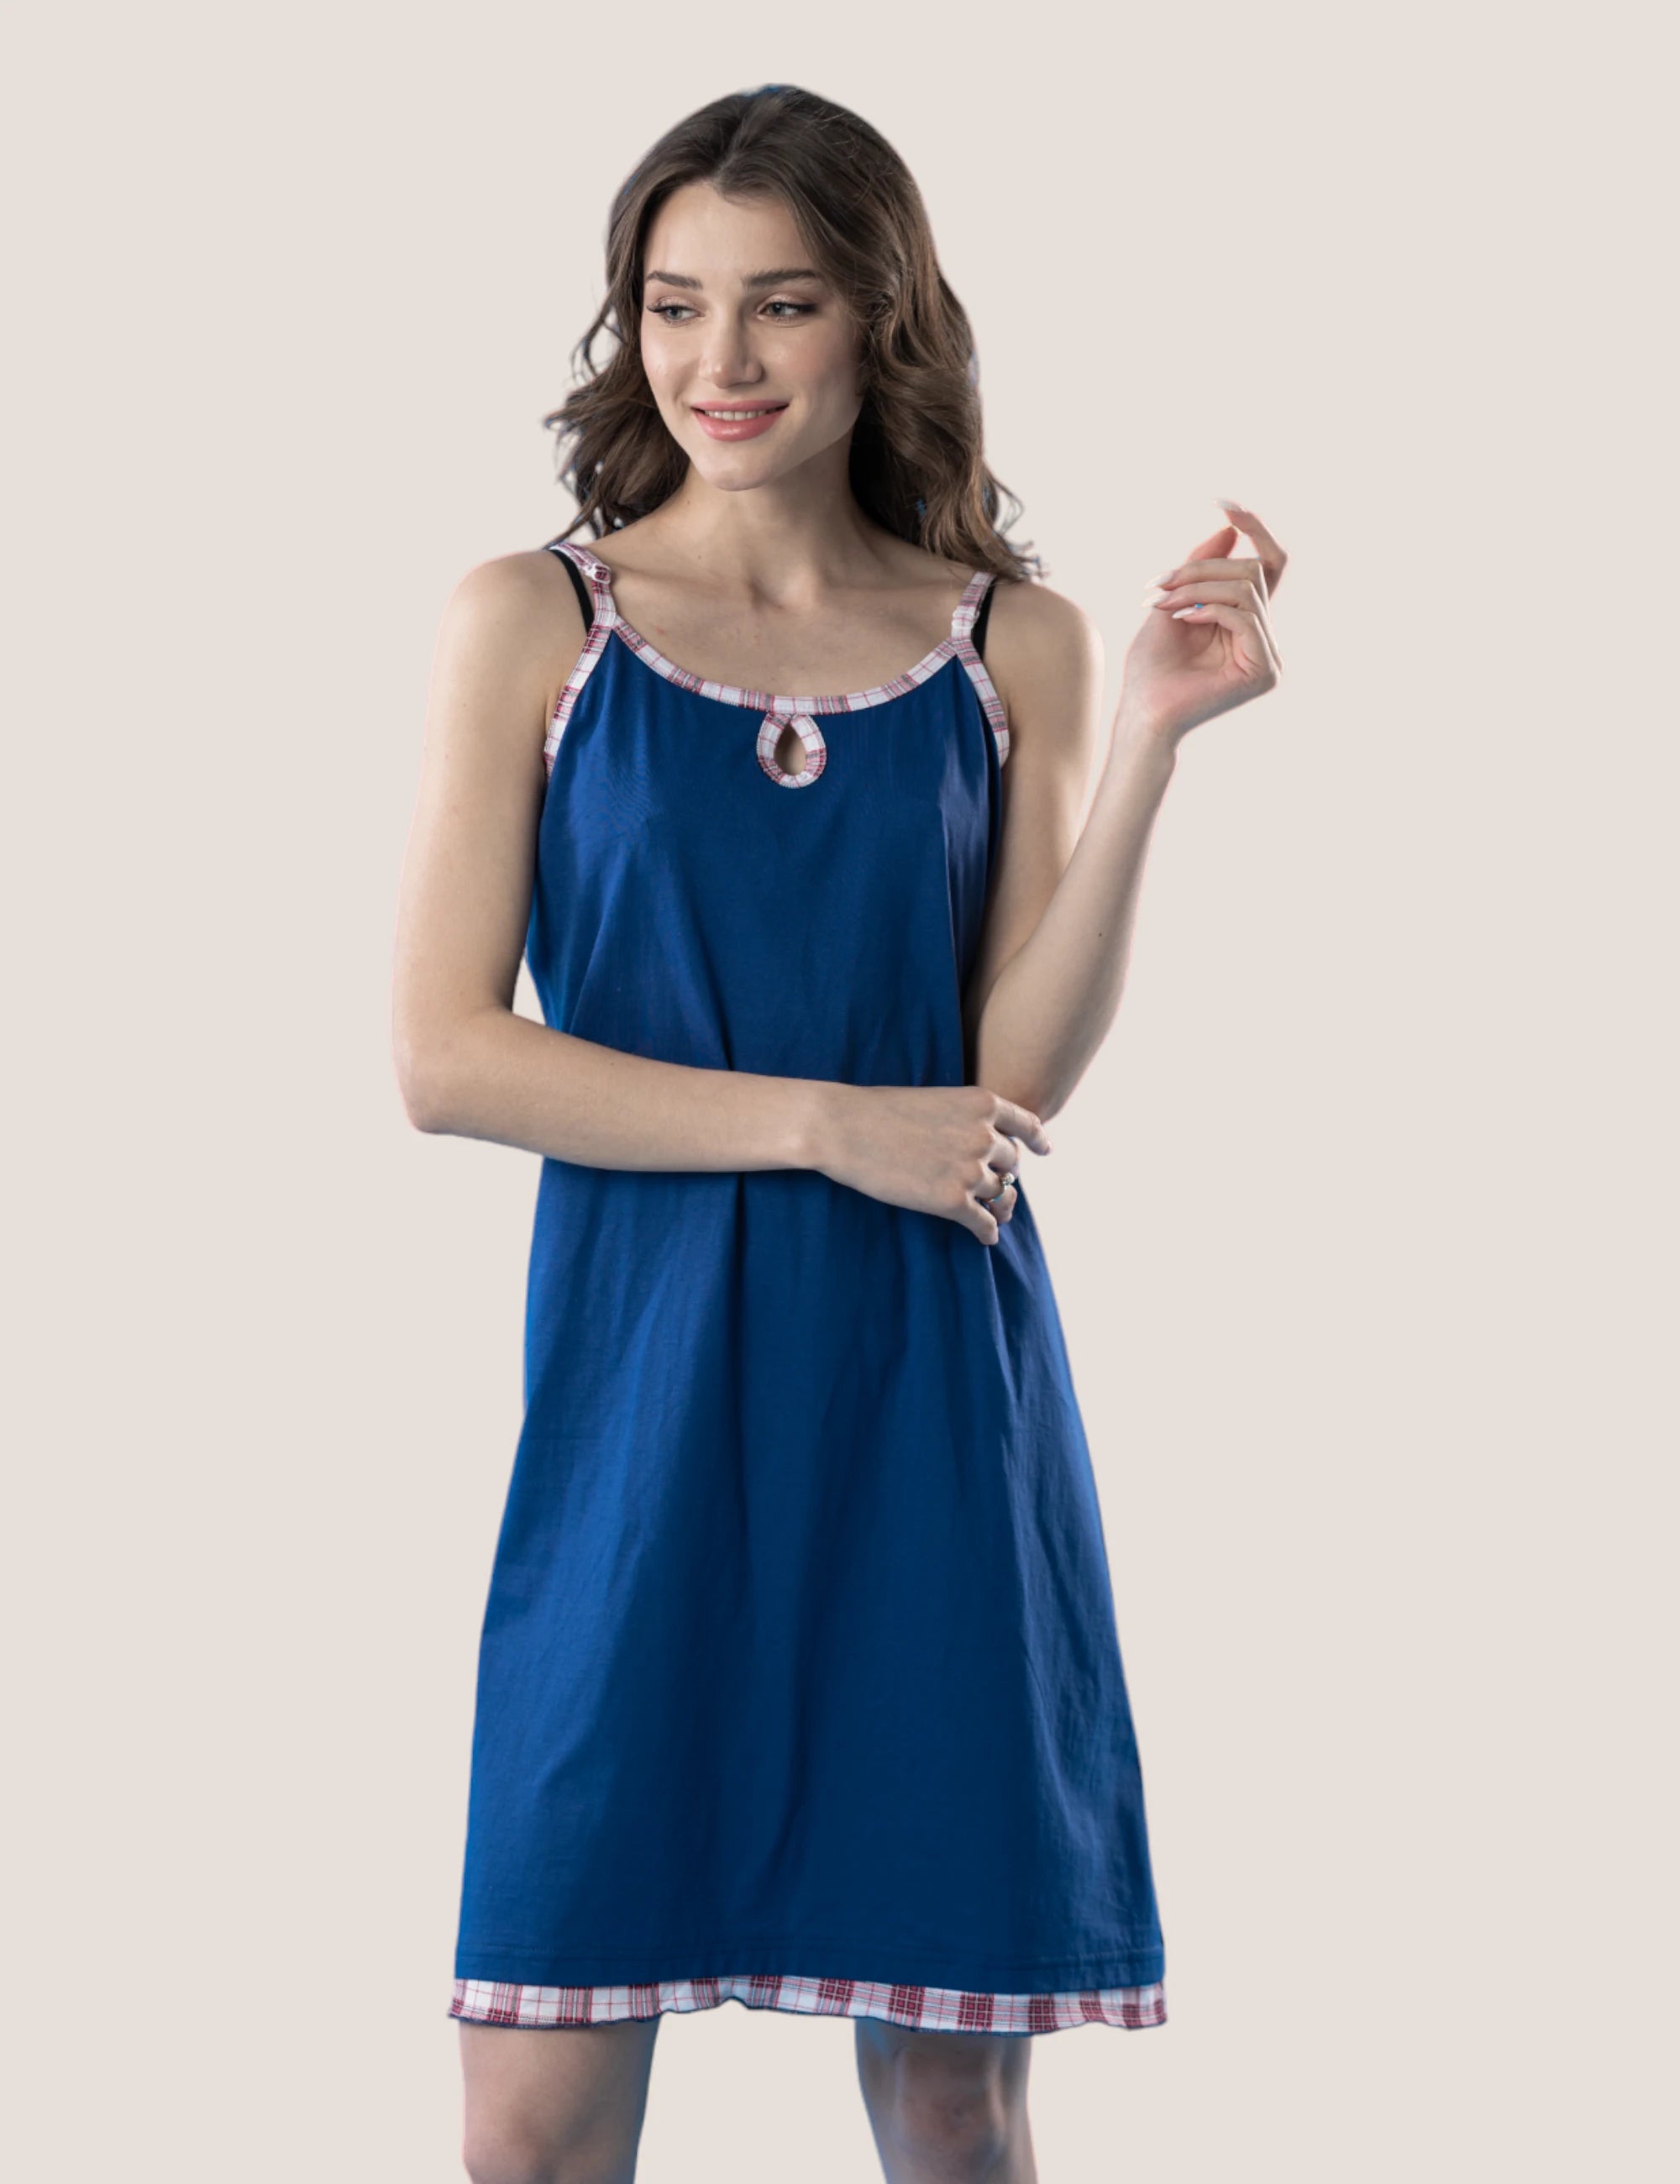 Blue Sheath dress